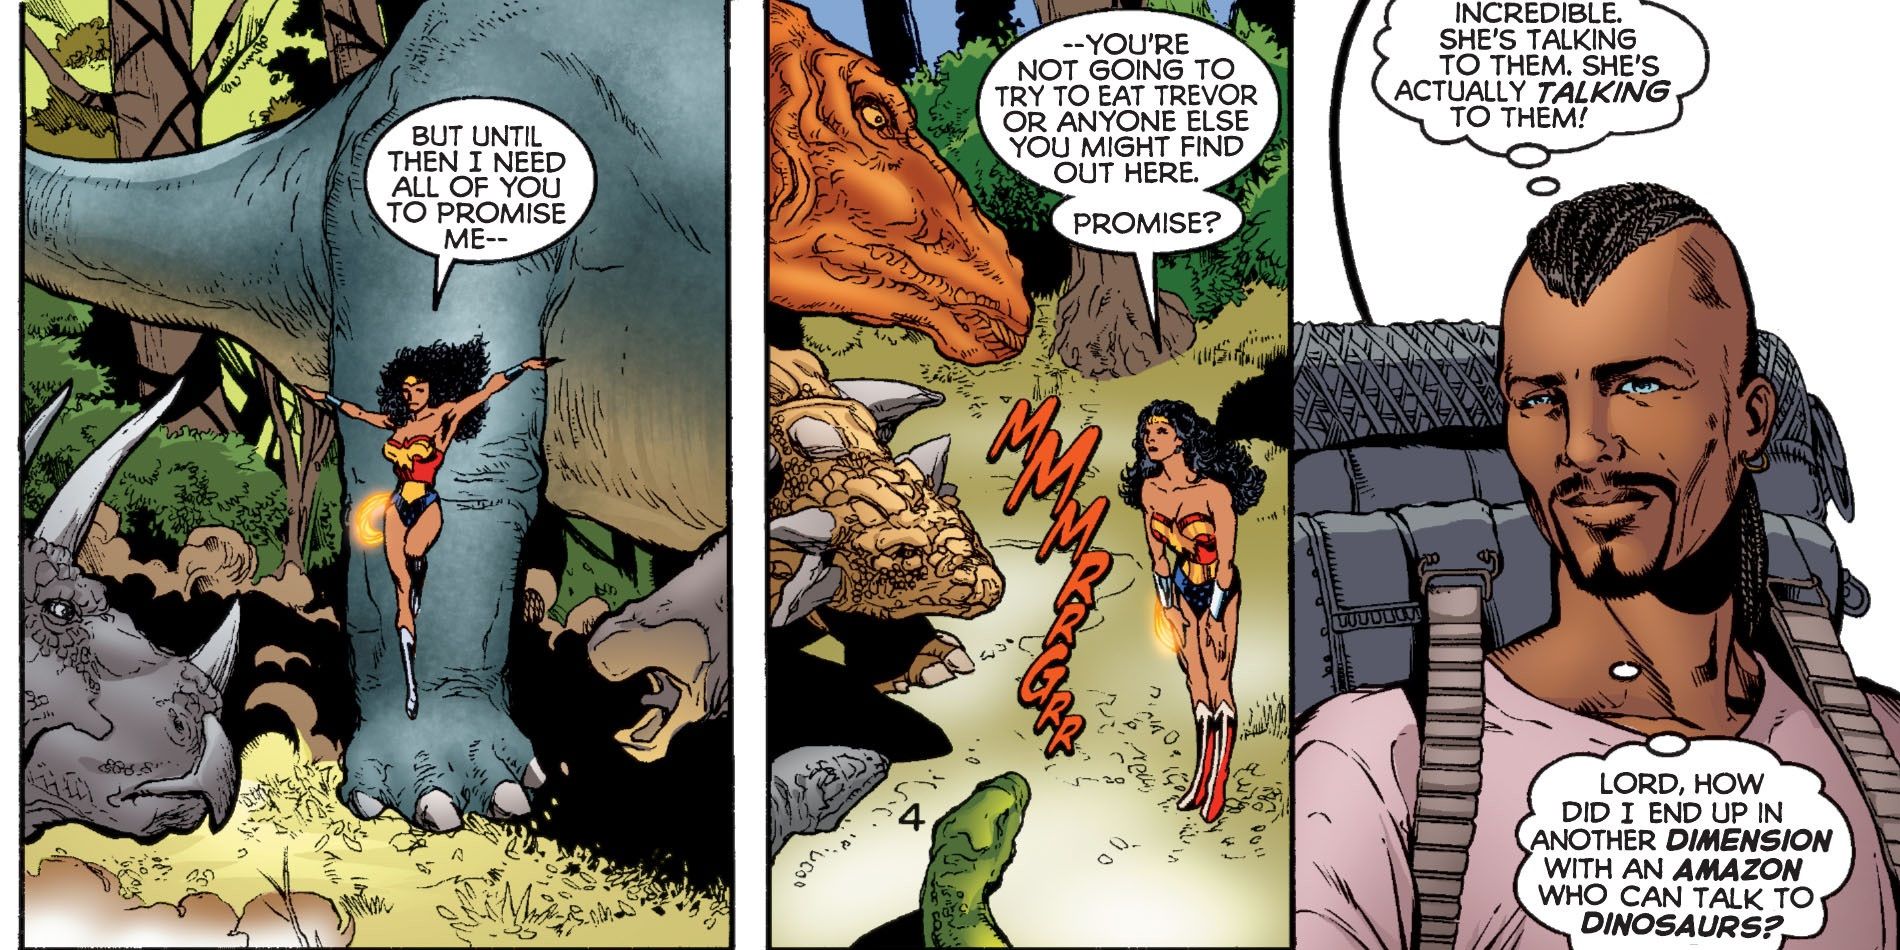 Wonder Woman talks to dinosaurs using her animal empathy